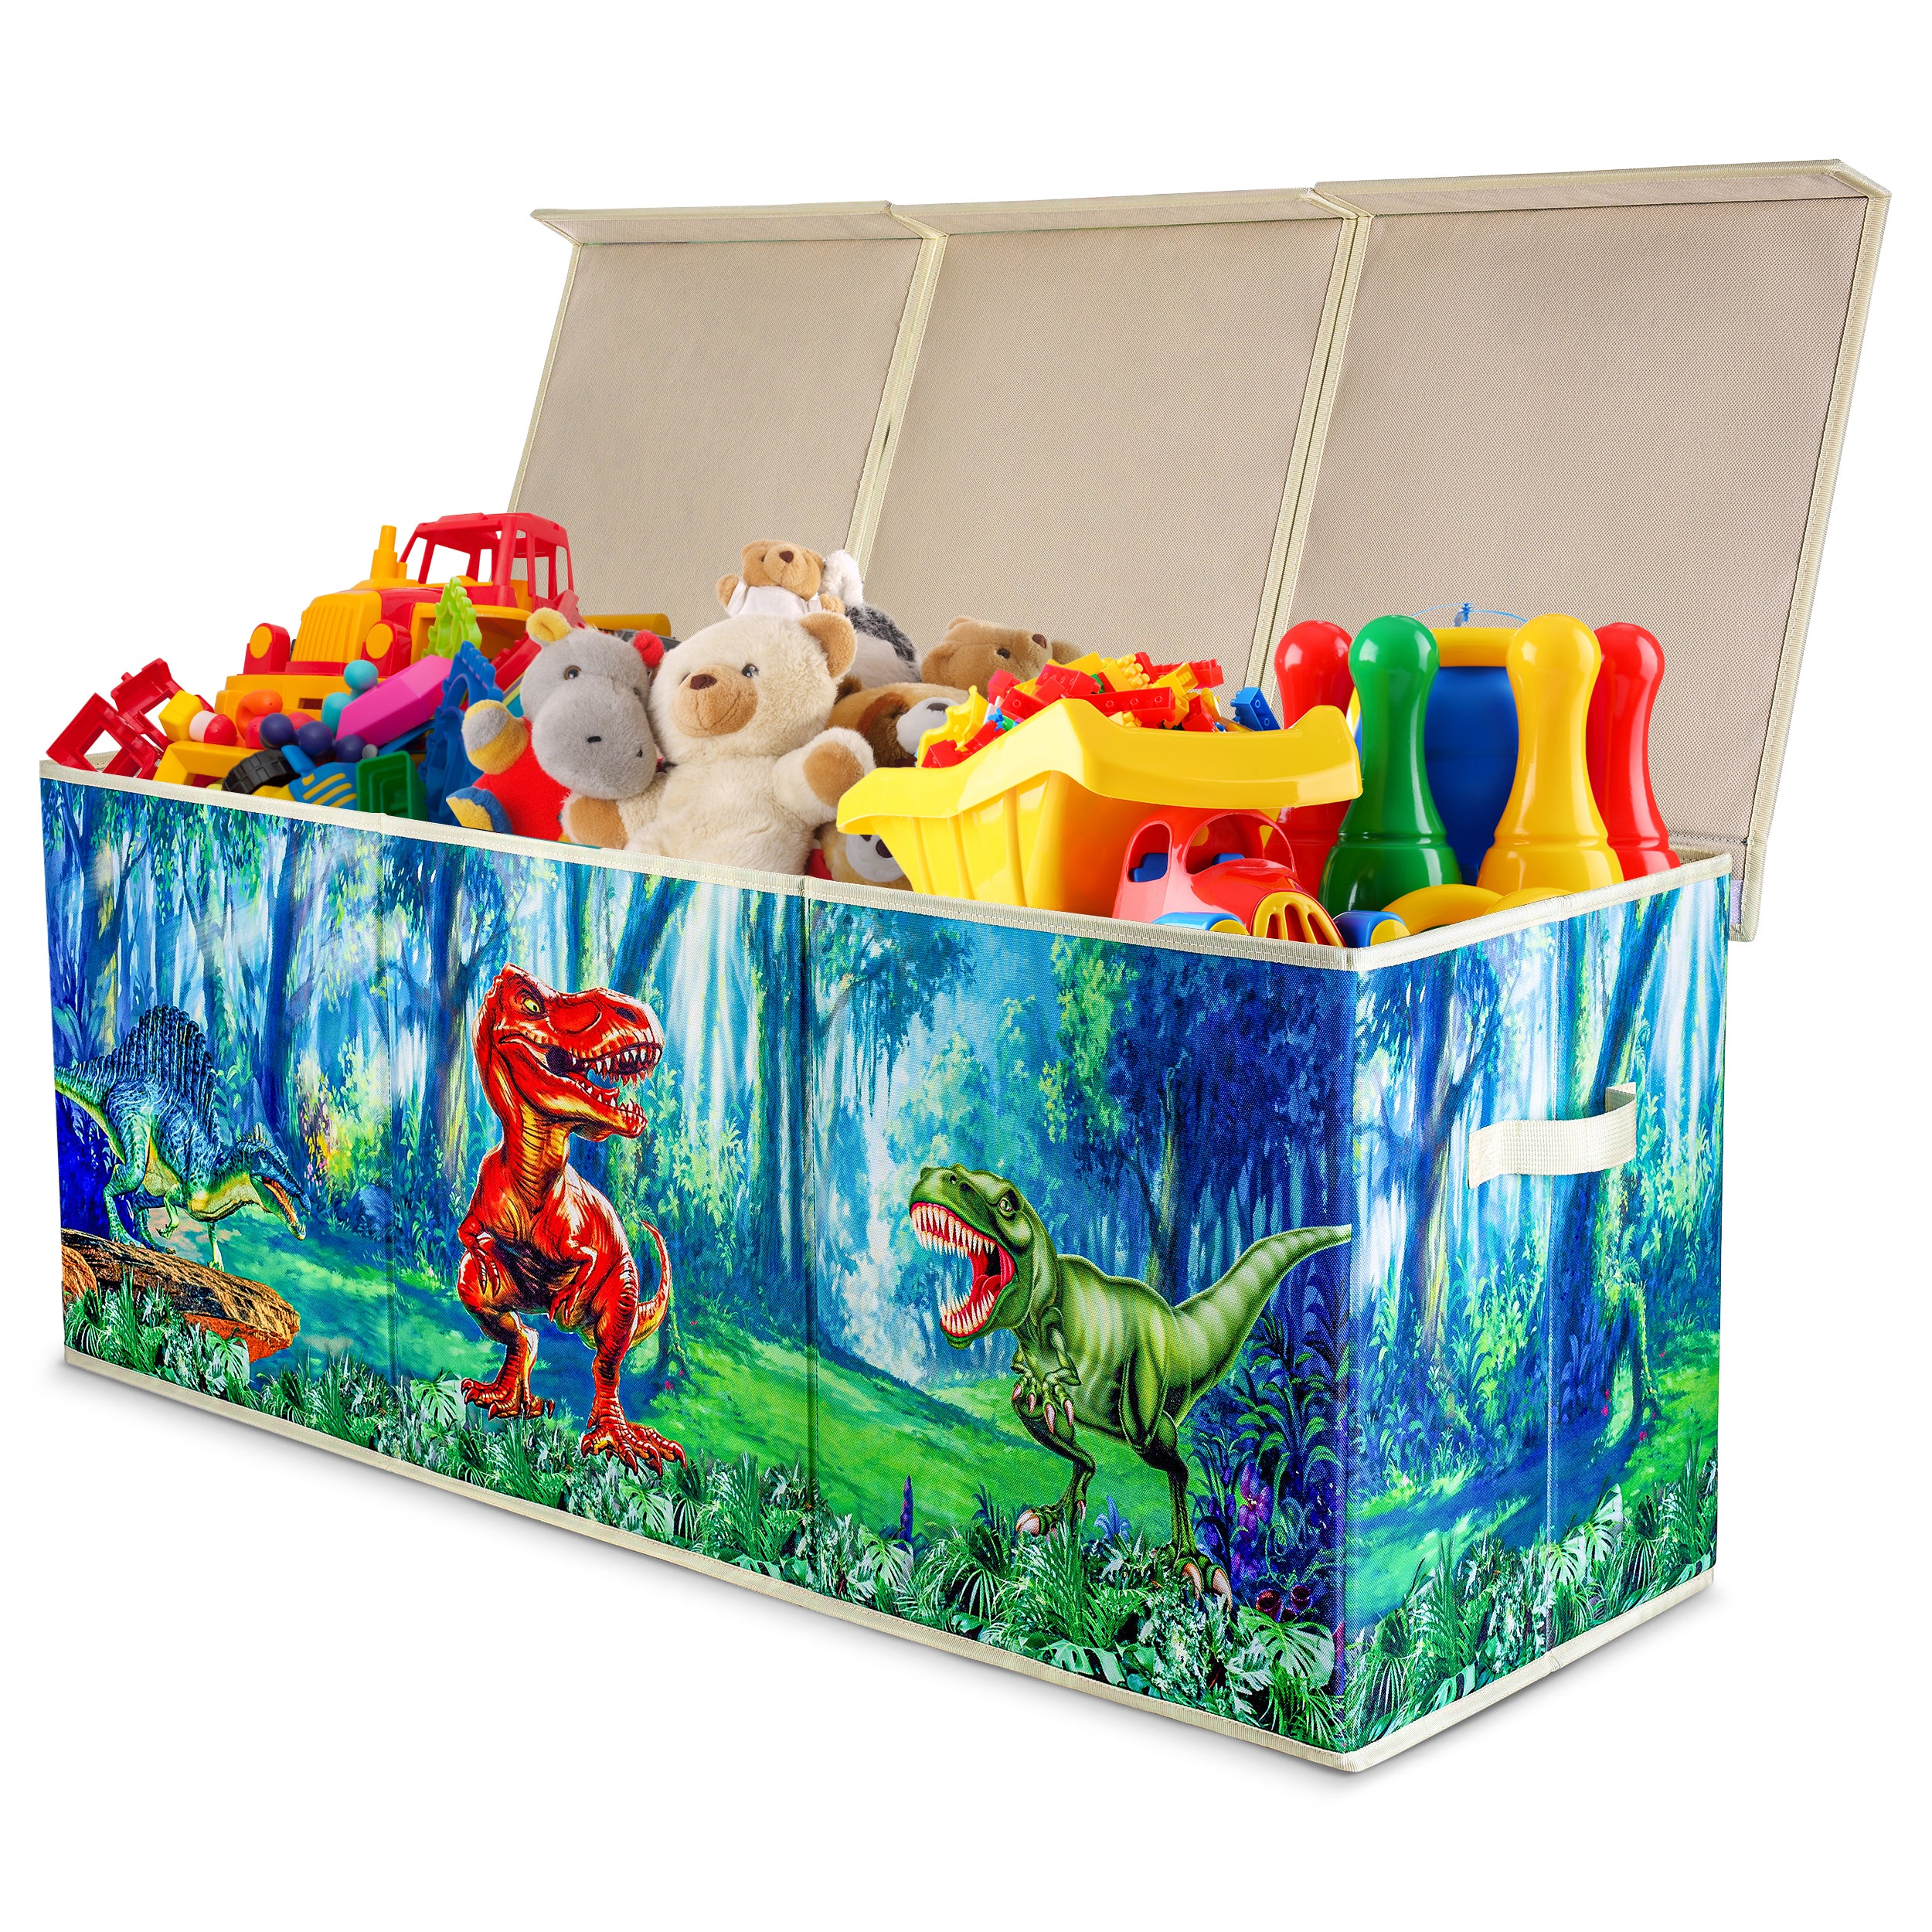 Toy to Enjoy Kids Toy Box - Large Stuffed Animal Storage